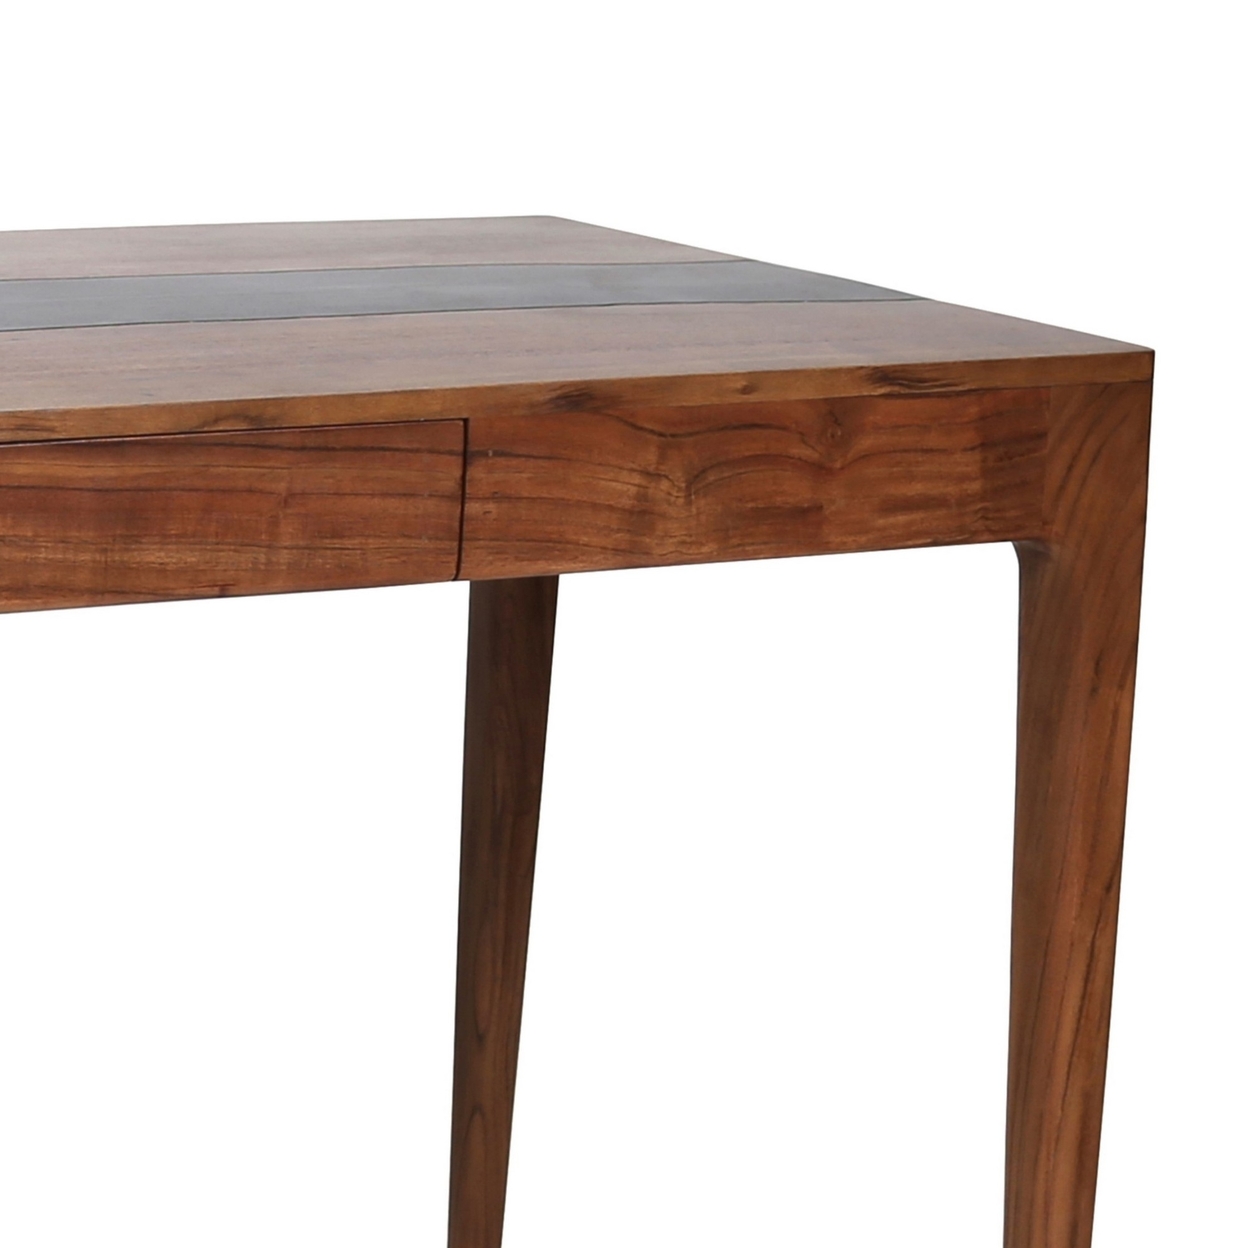 52 Inch Writing Desk, Natural Textured Acacia Wood, Burnished Brown- Saltoro Sherpi